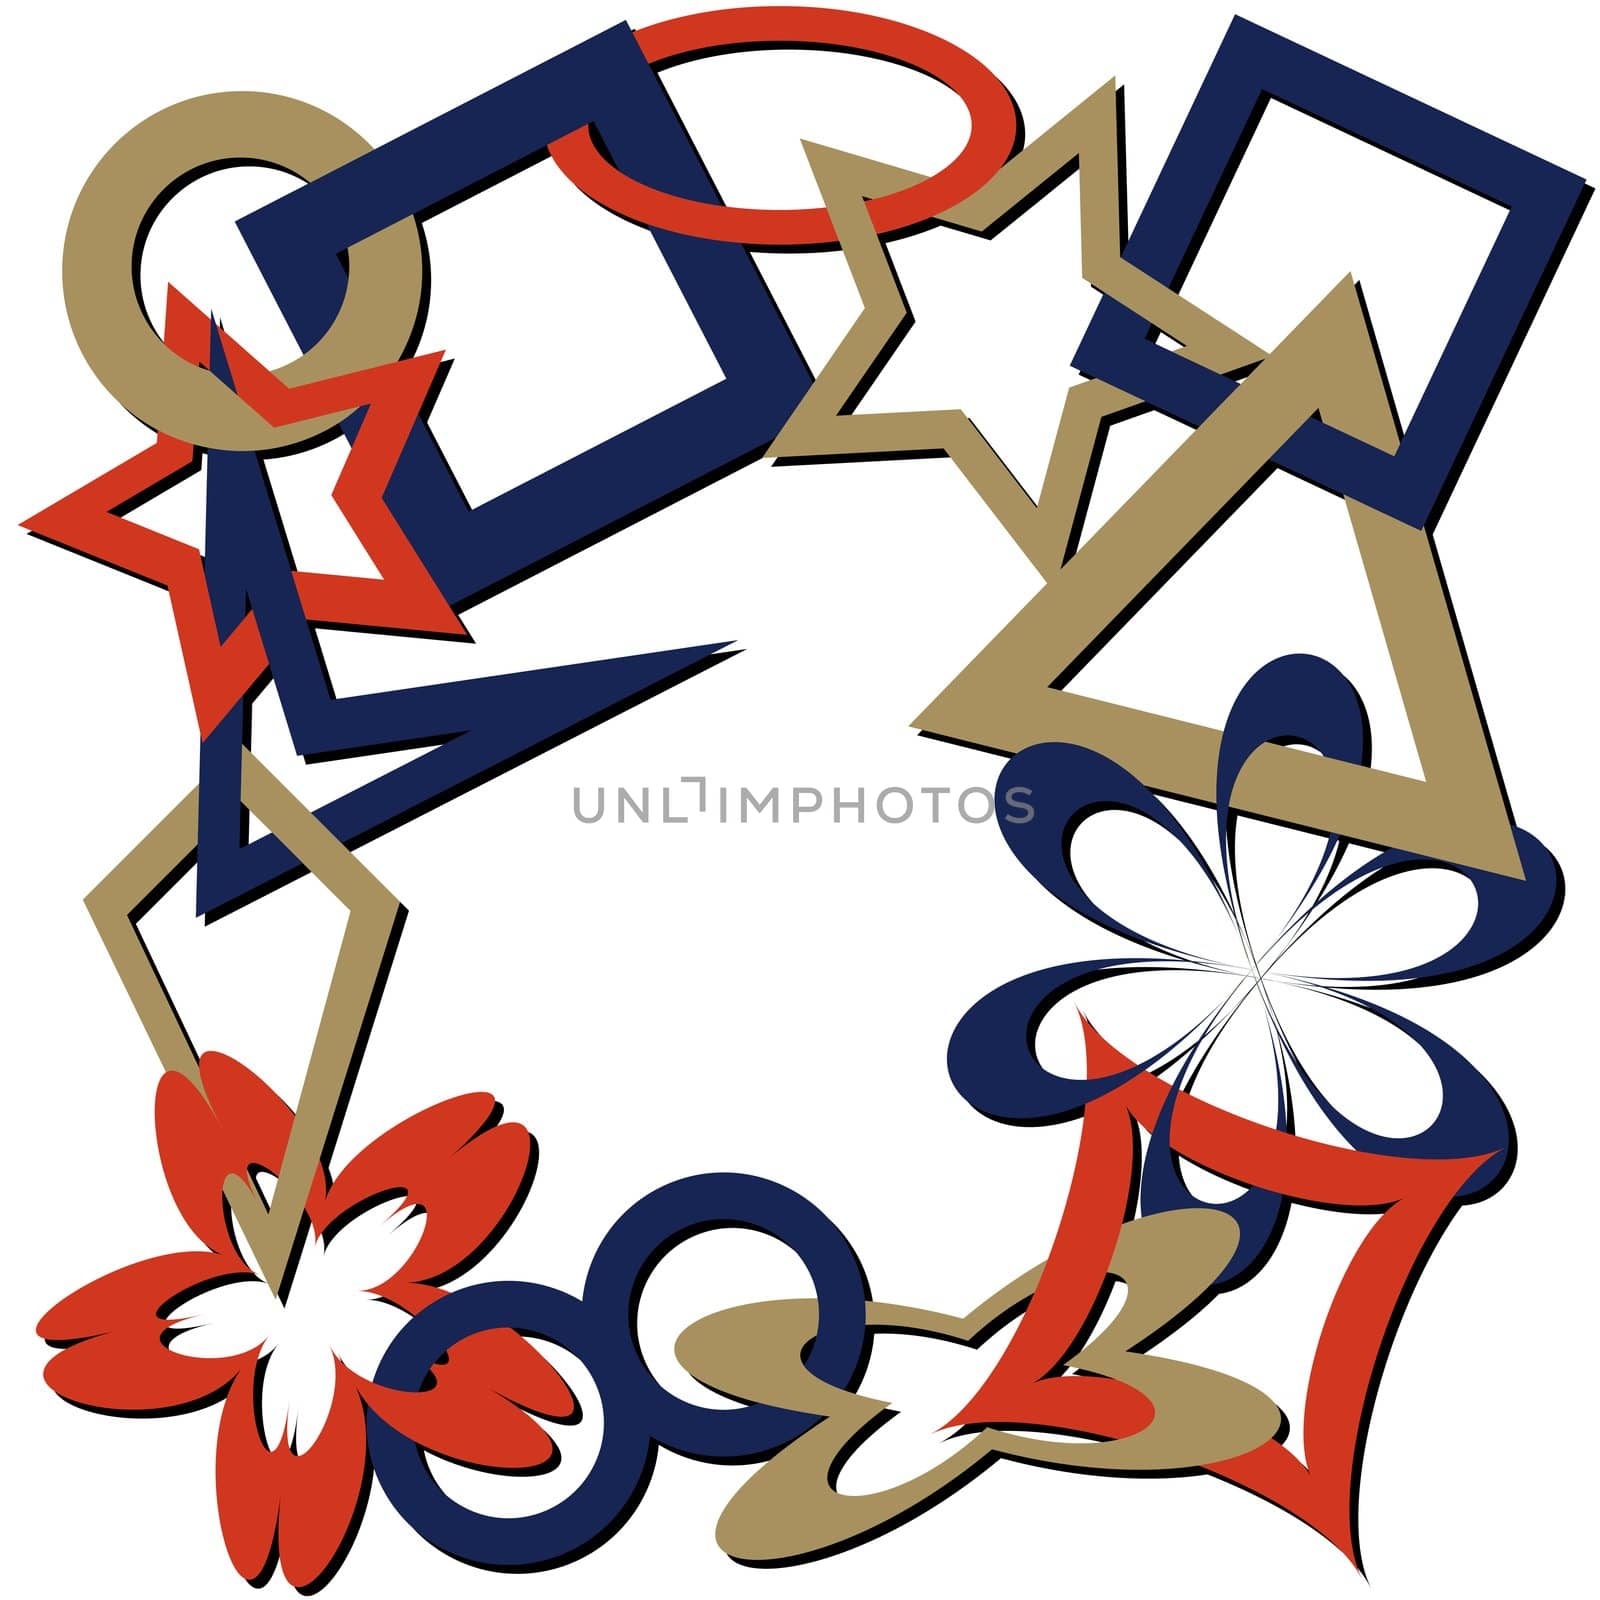 geometric shapes 2 by robertosch